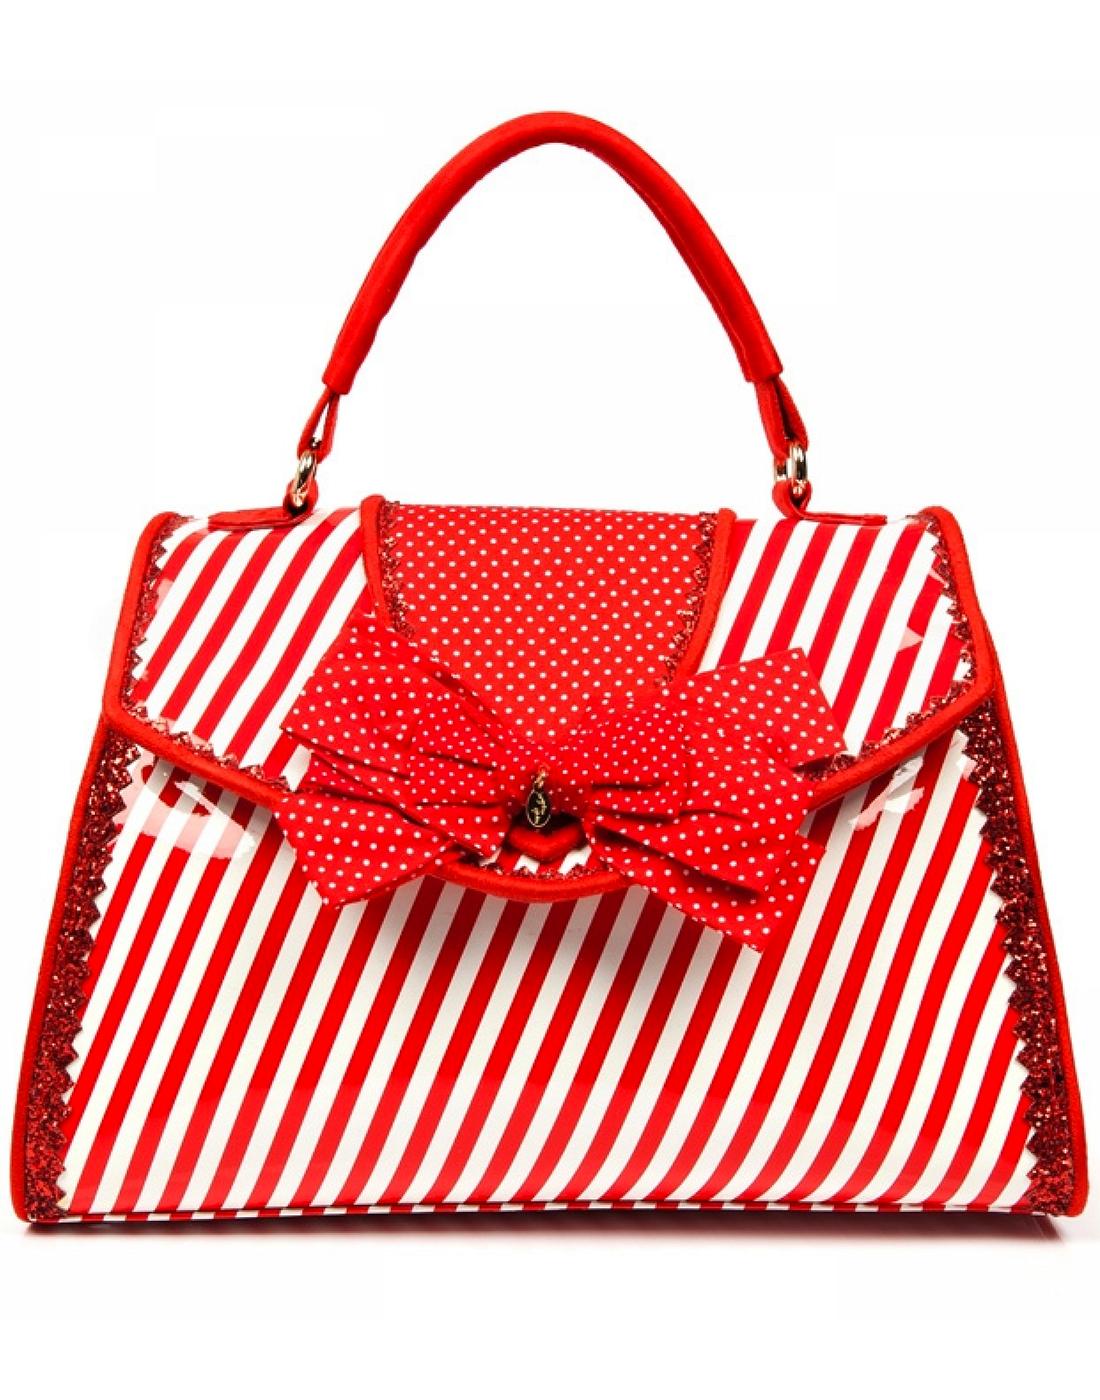 Peggy IRREGULAR CHOICE Retro Box Hangbag in Red